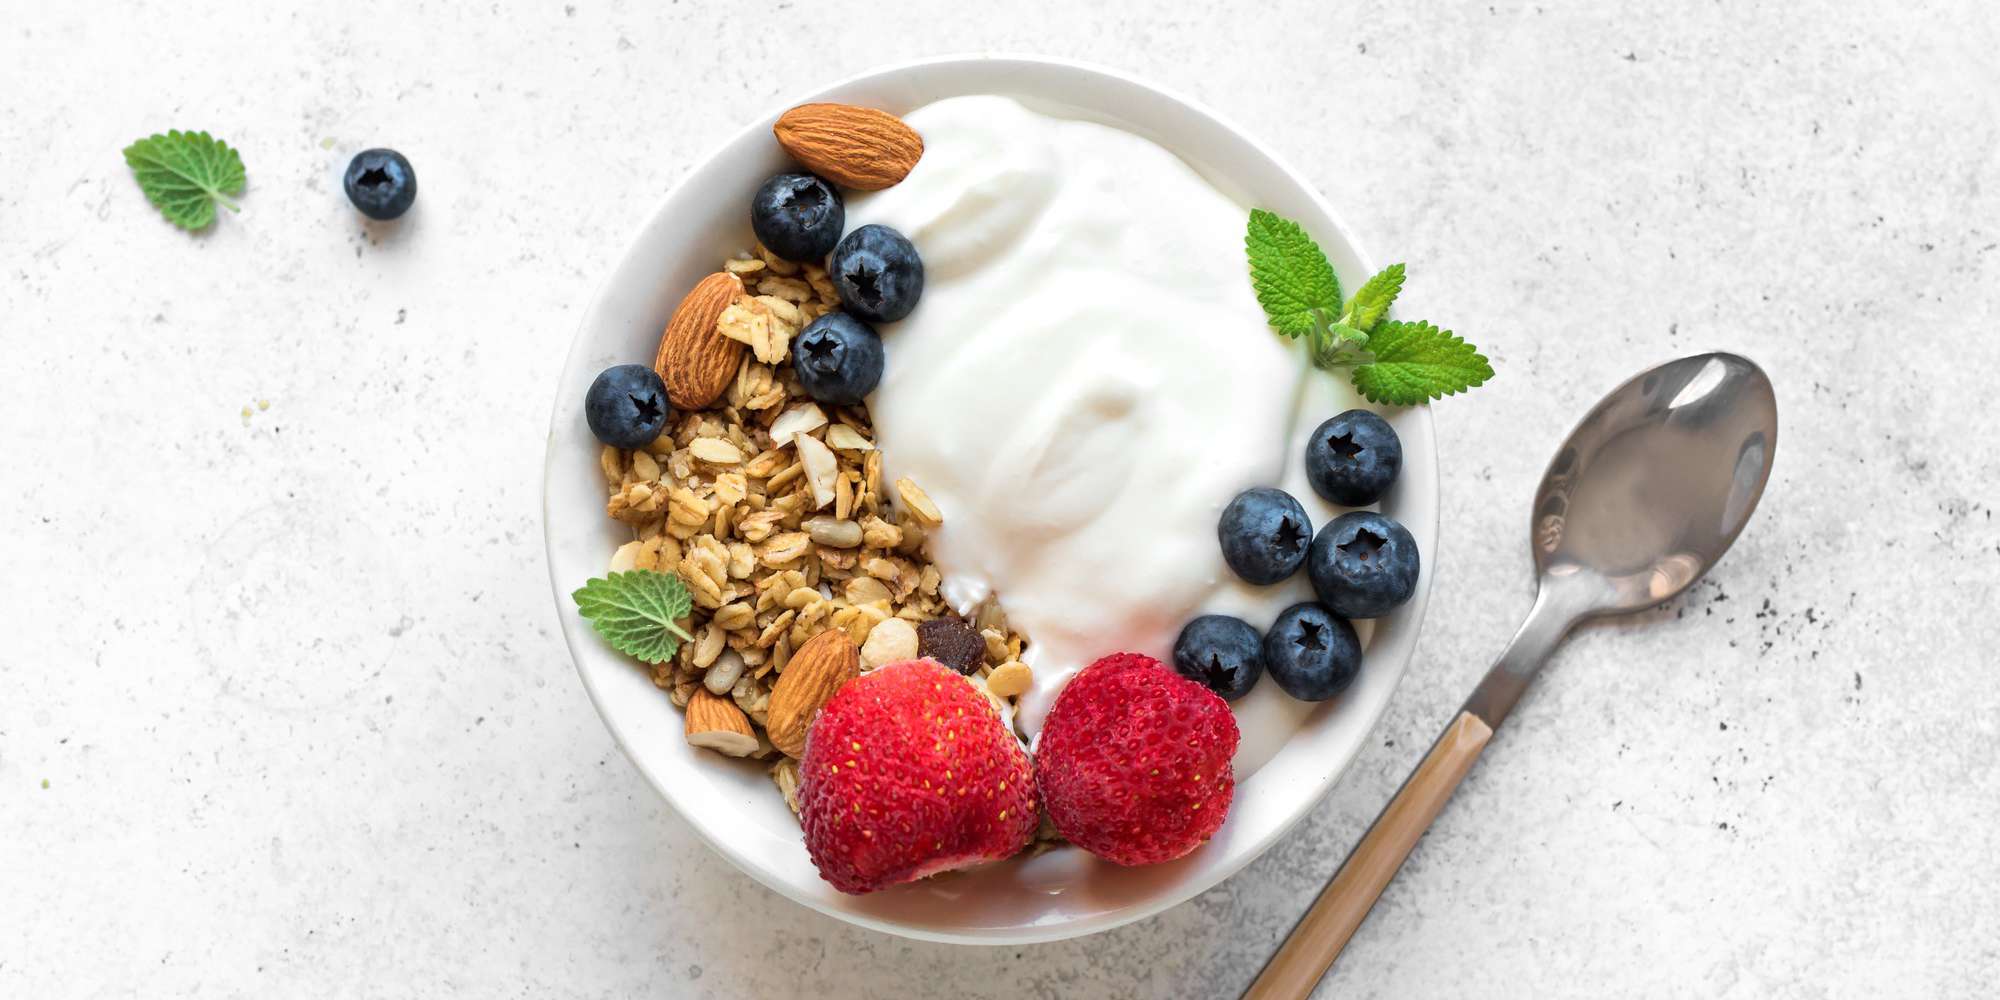 Greek Yogurt With Mixed Berries